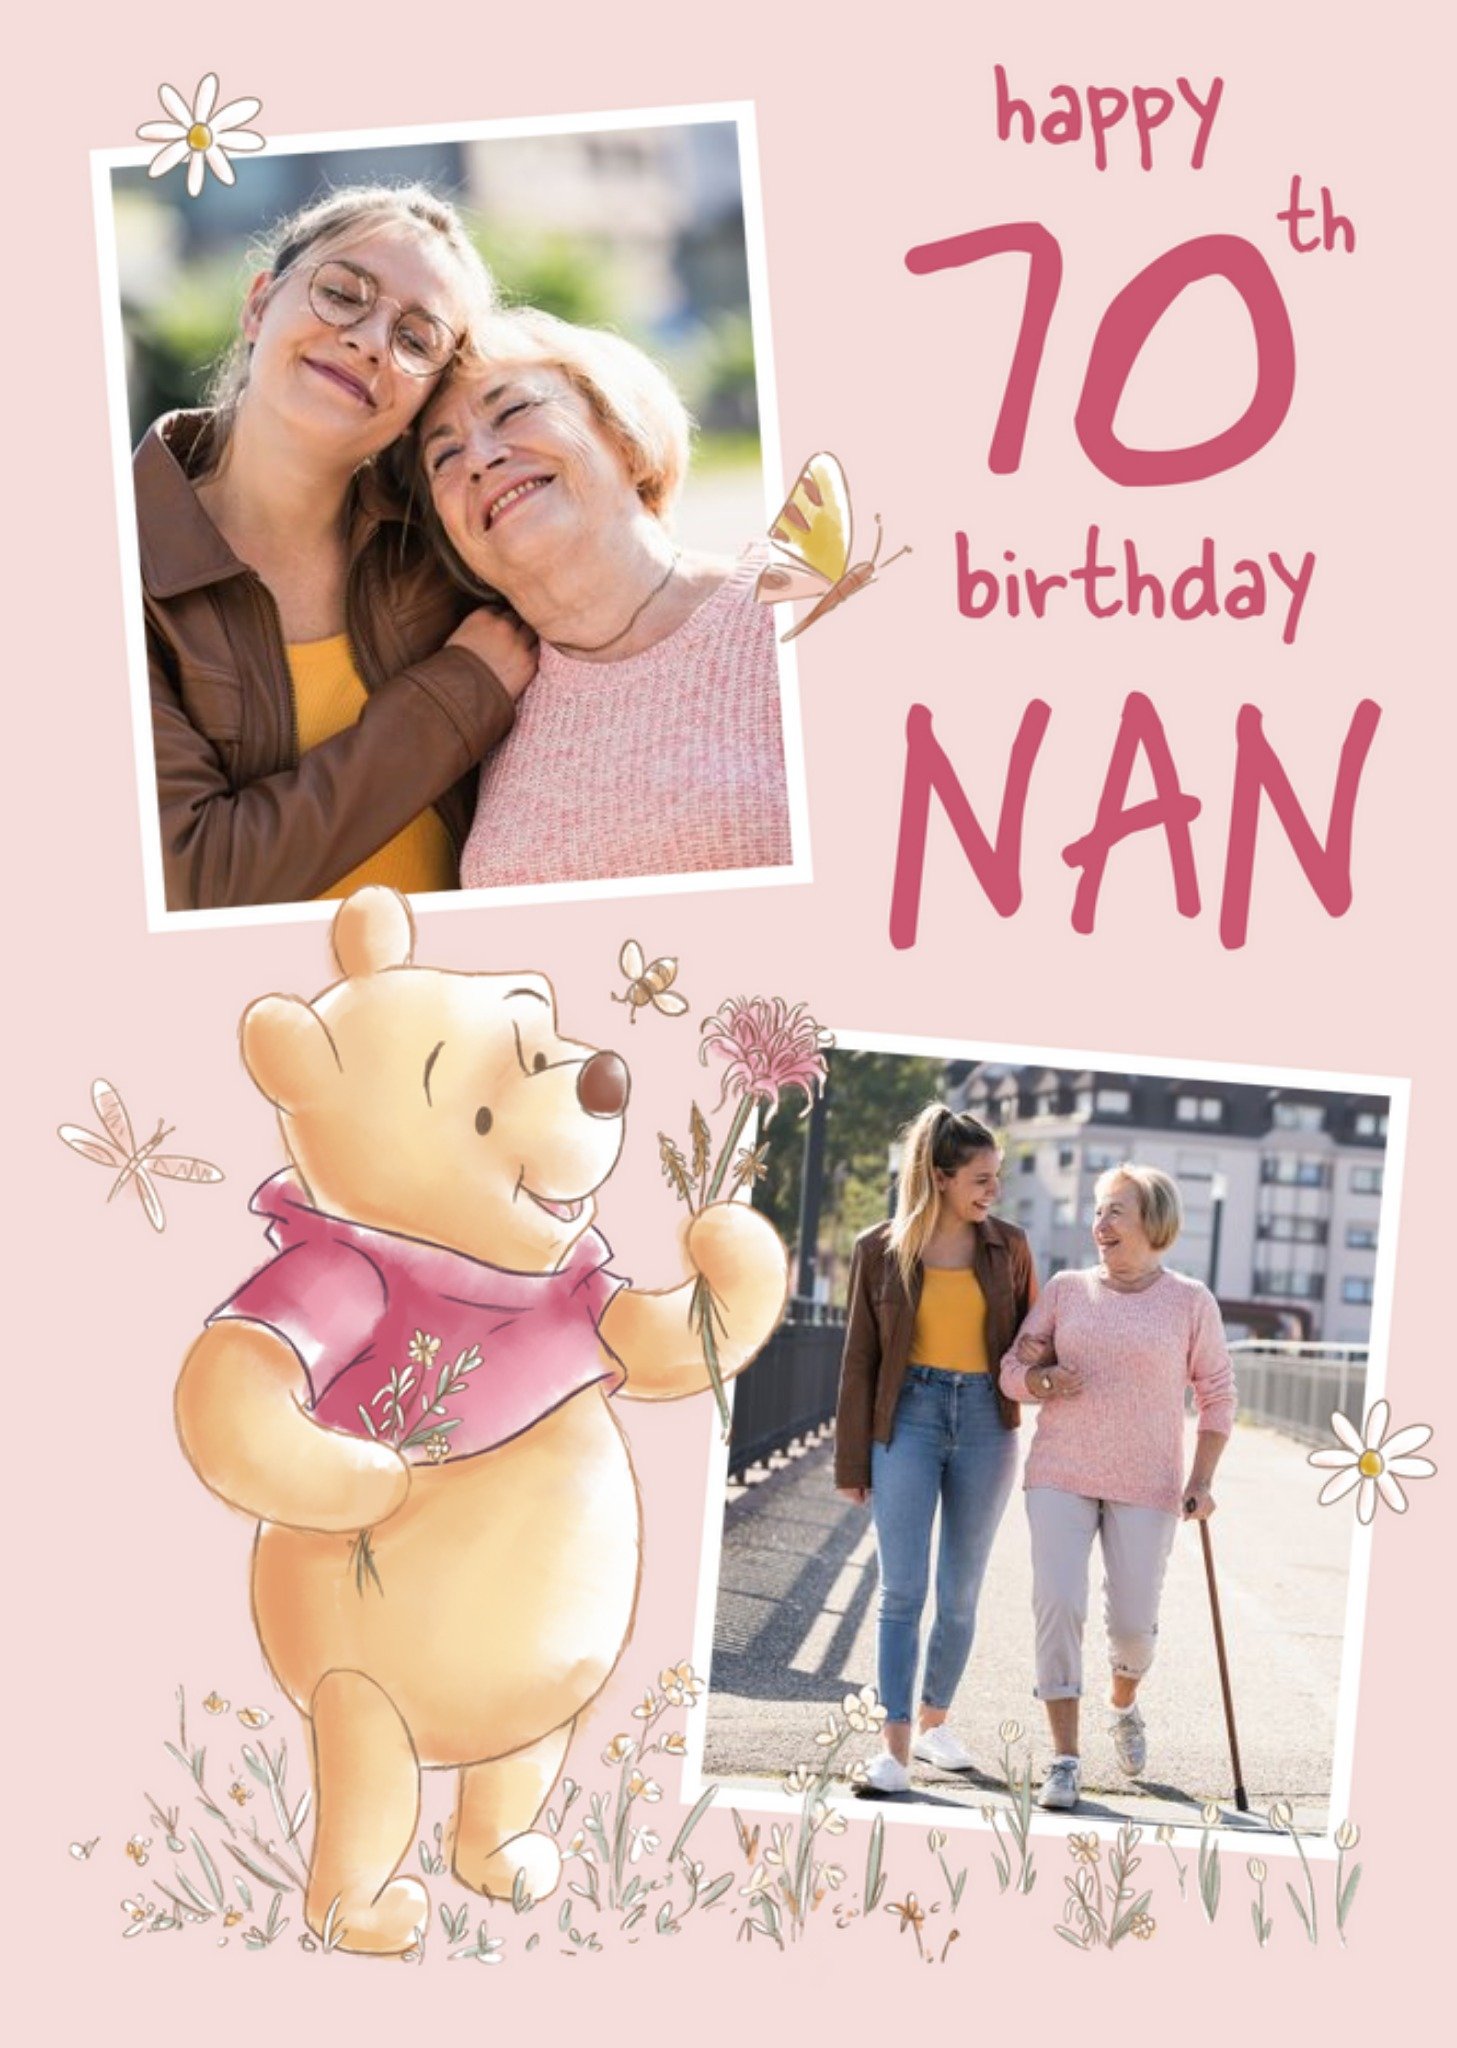 Cute Disney Winnie the Pooh Nan 70th Birthday Photo Upload Card, Large